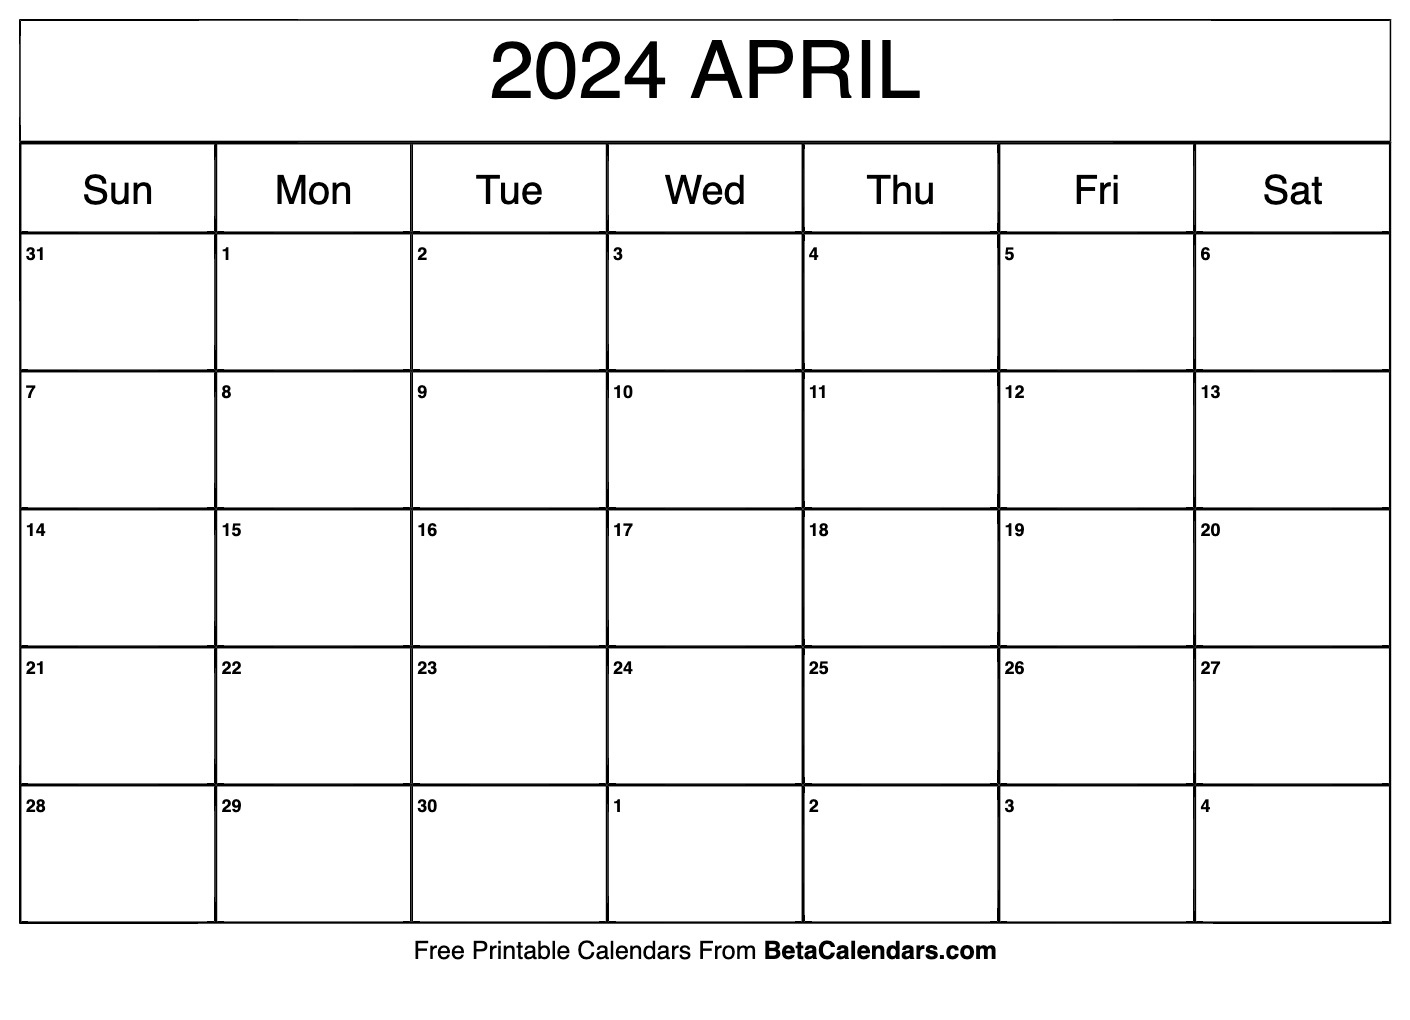 Free Printable April 2024 Calendar regarding Free Printable April 2024 Desk Calendar